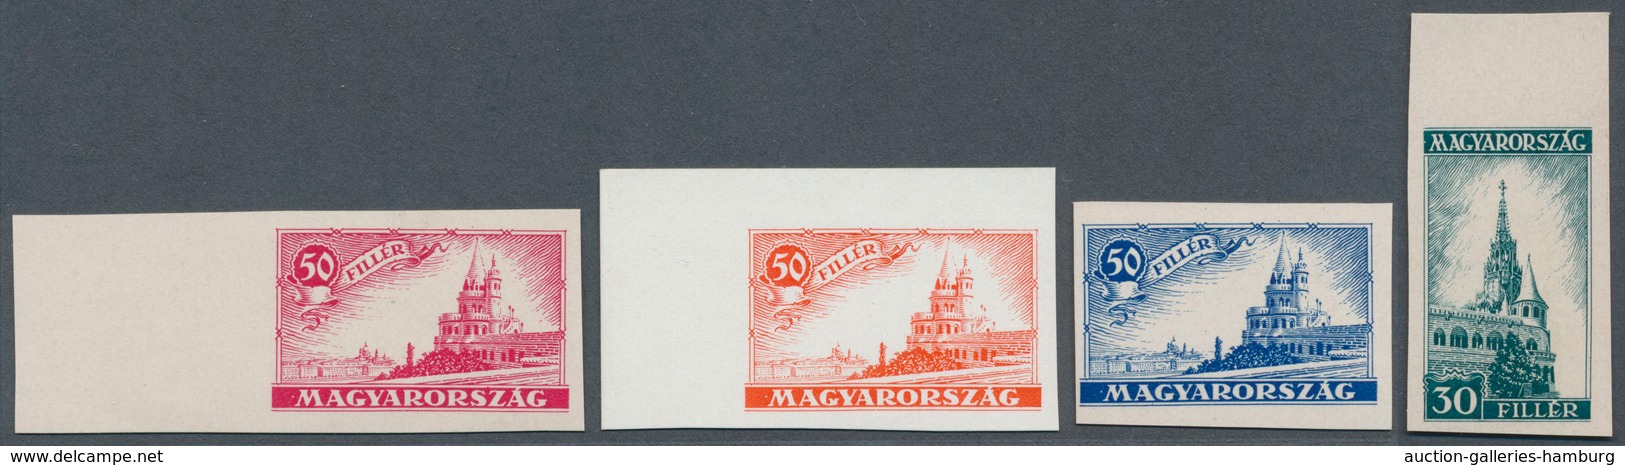 Ungarn: 1926: "30 FILLER MAGYARORSZAG" Or "50 FILLER" Showing The Matthias Cathedral ECKERLIN ESSAYS - Briefe U. Dokumente